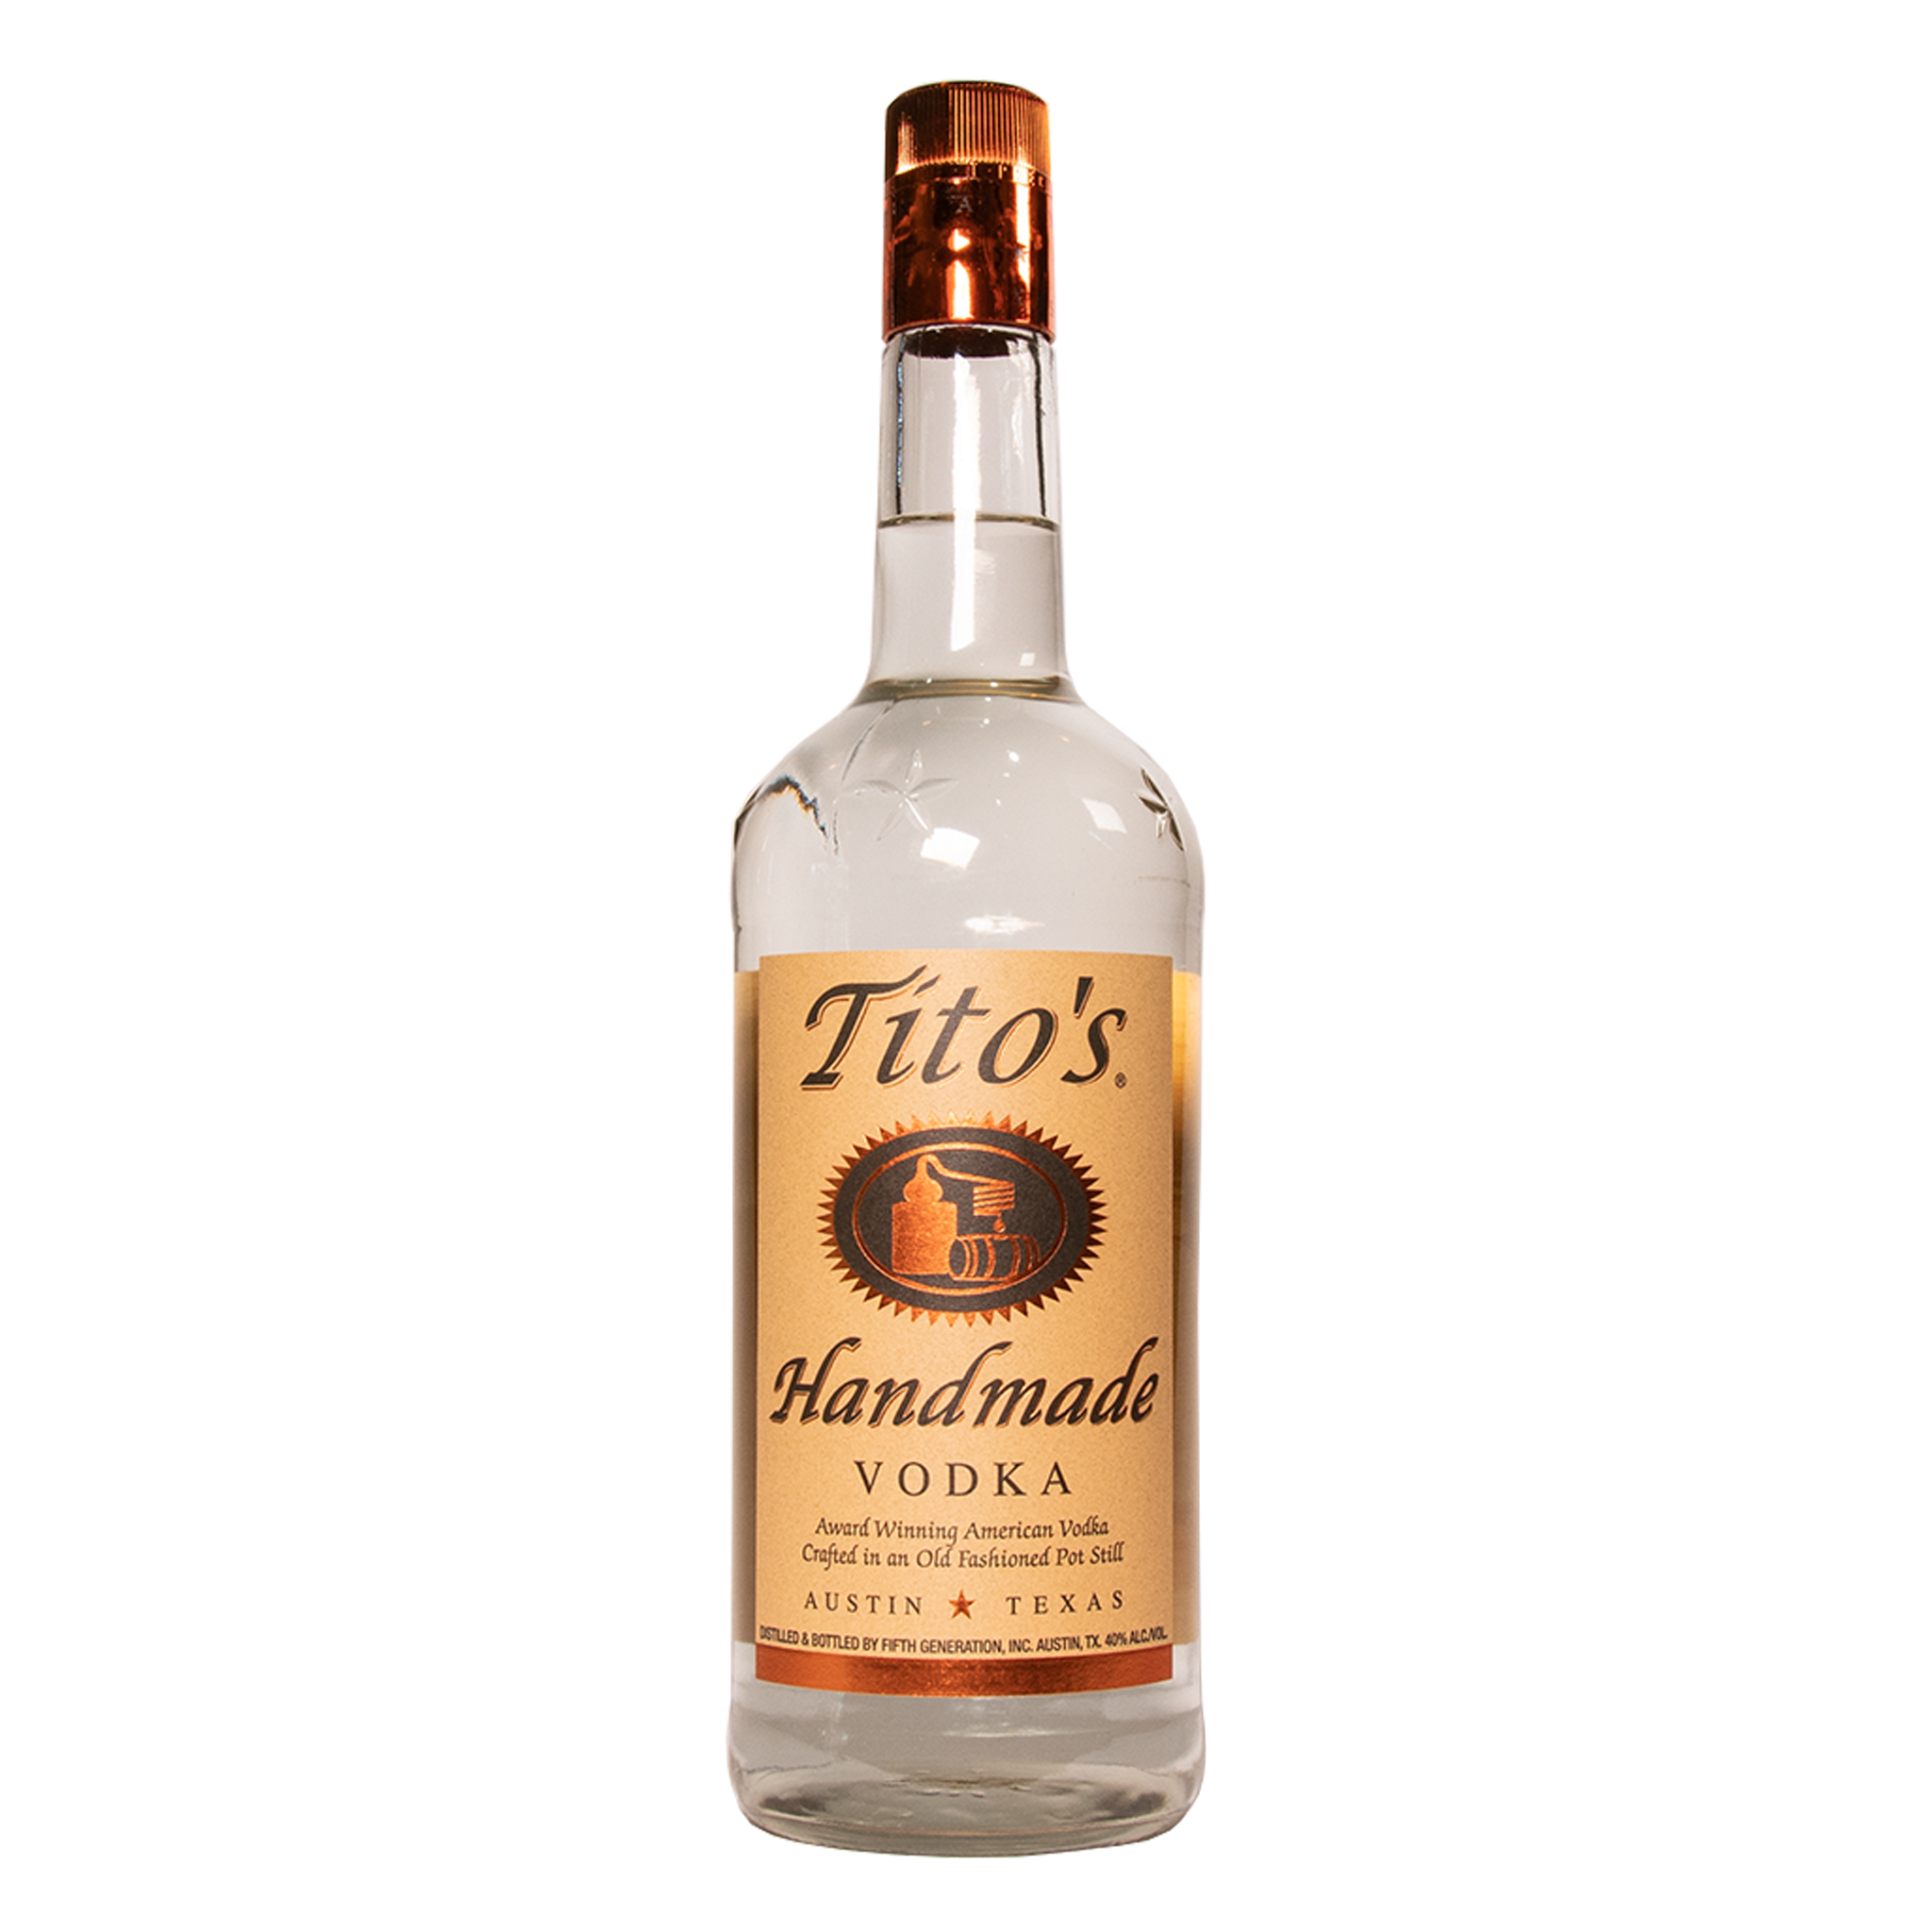 Titos Handmade Vodka Tortuga Cayman 8898